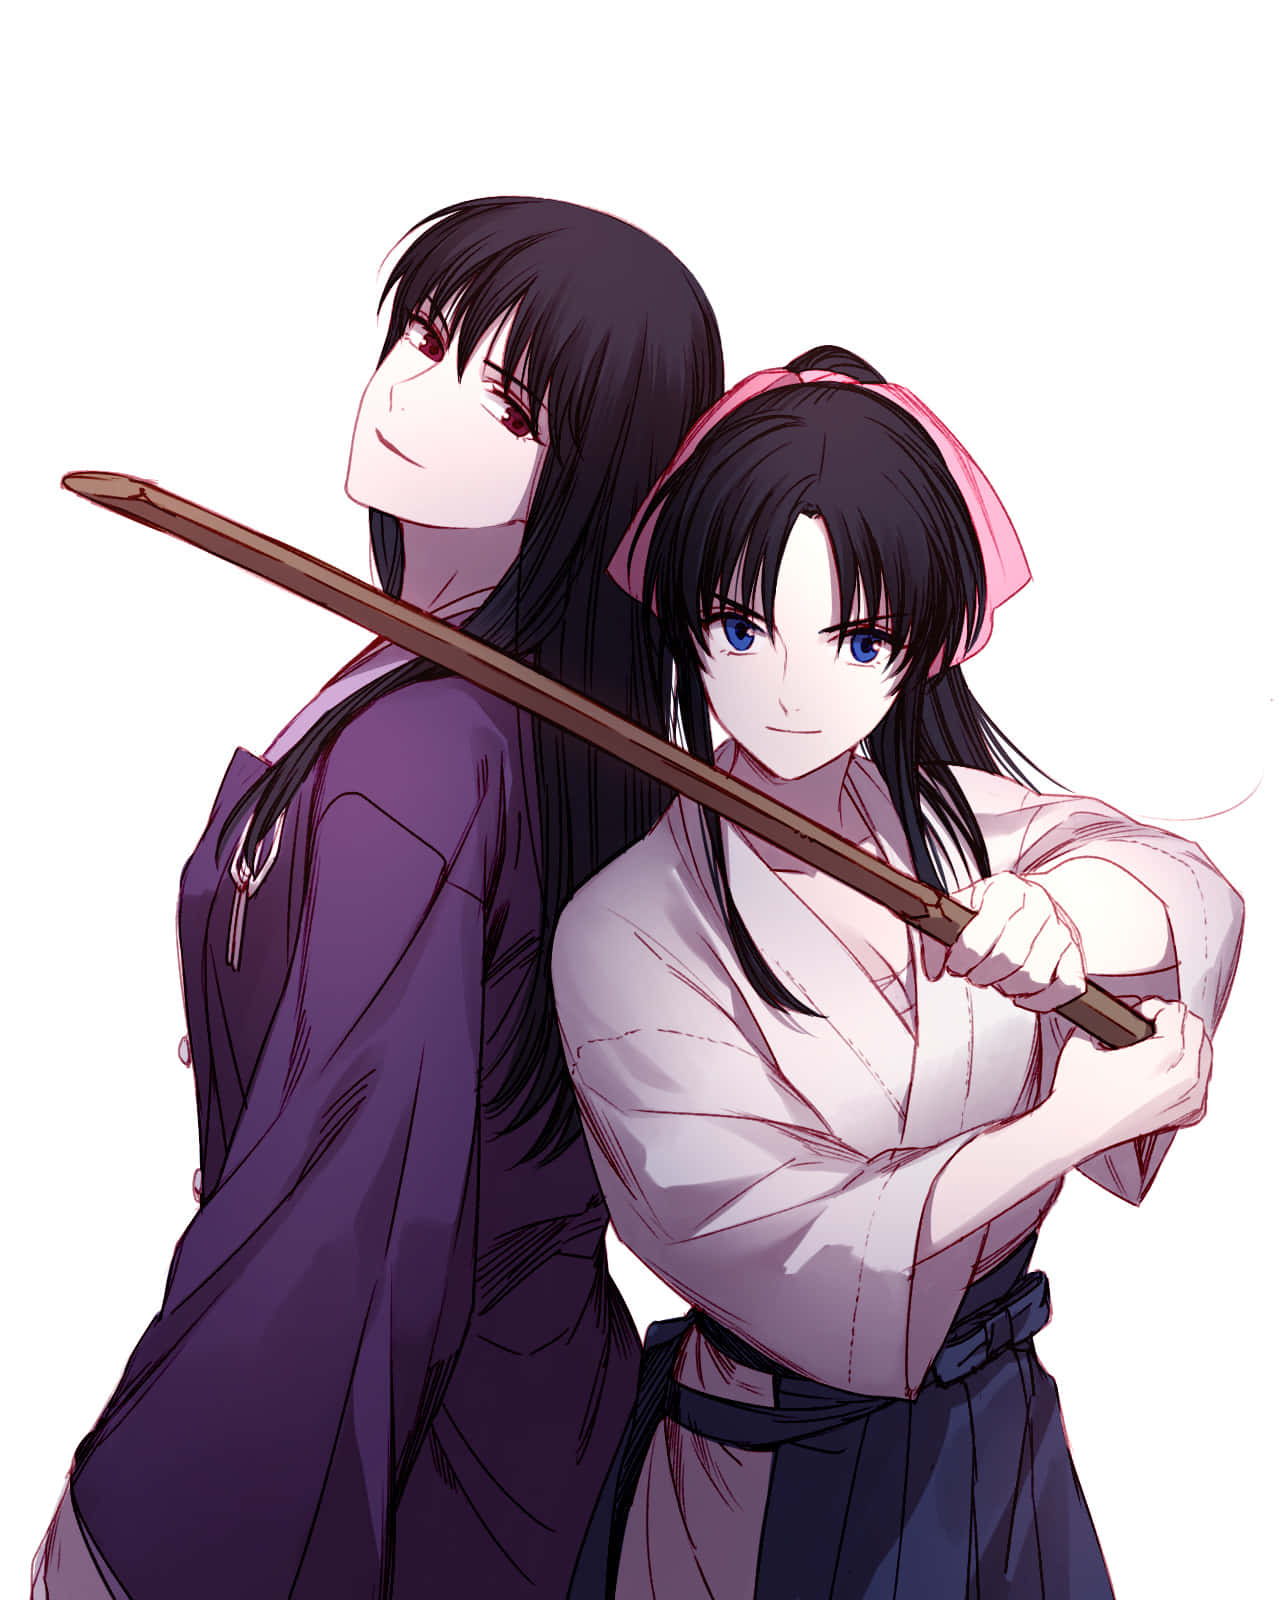 Kenshin And Kaoru - Unbreakable Bond Of Love And Trust Wallpaper